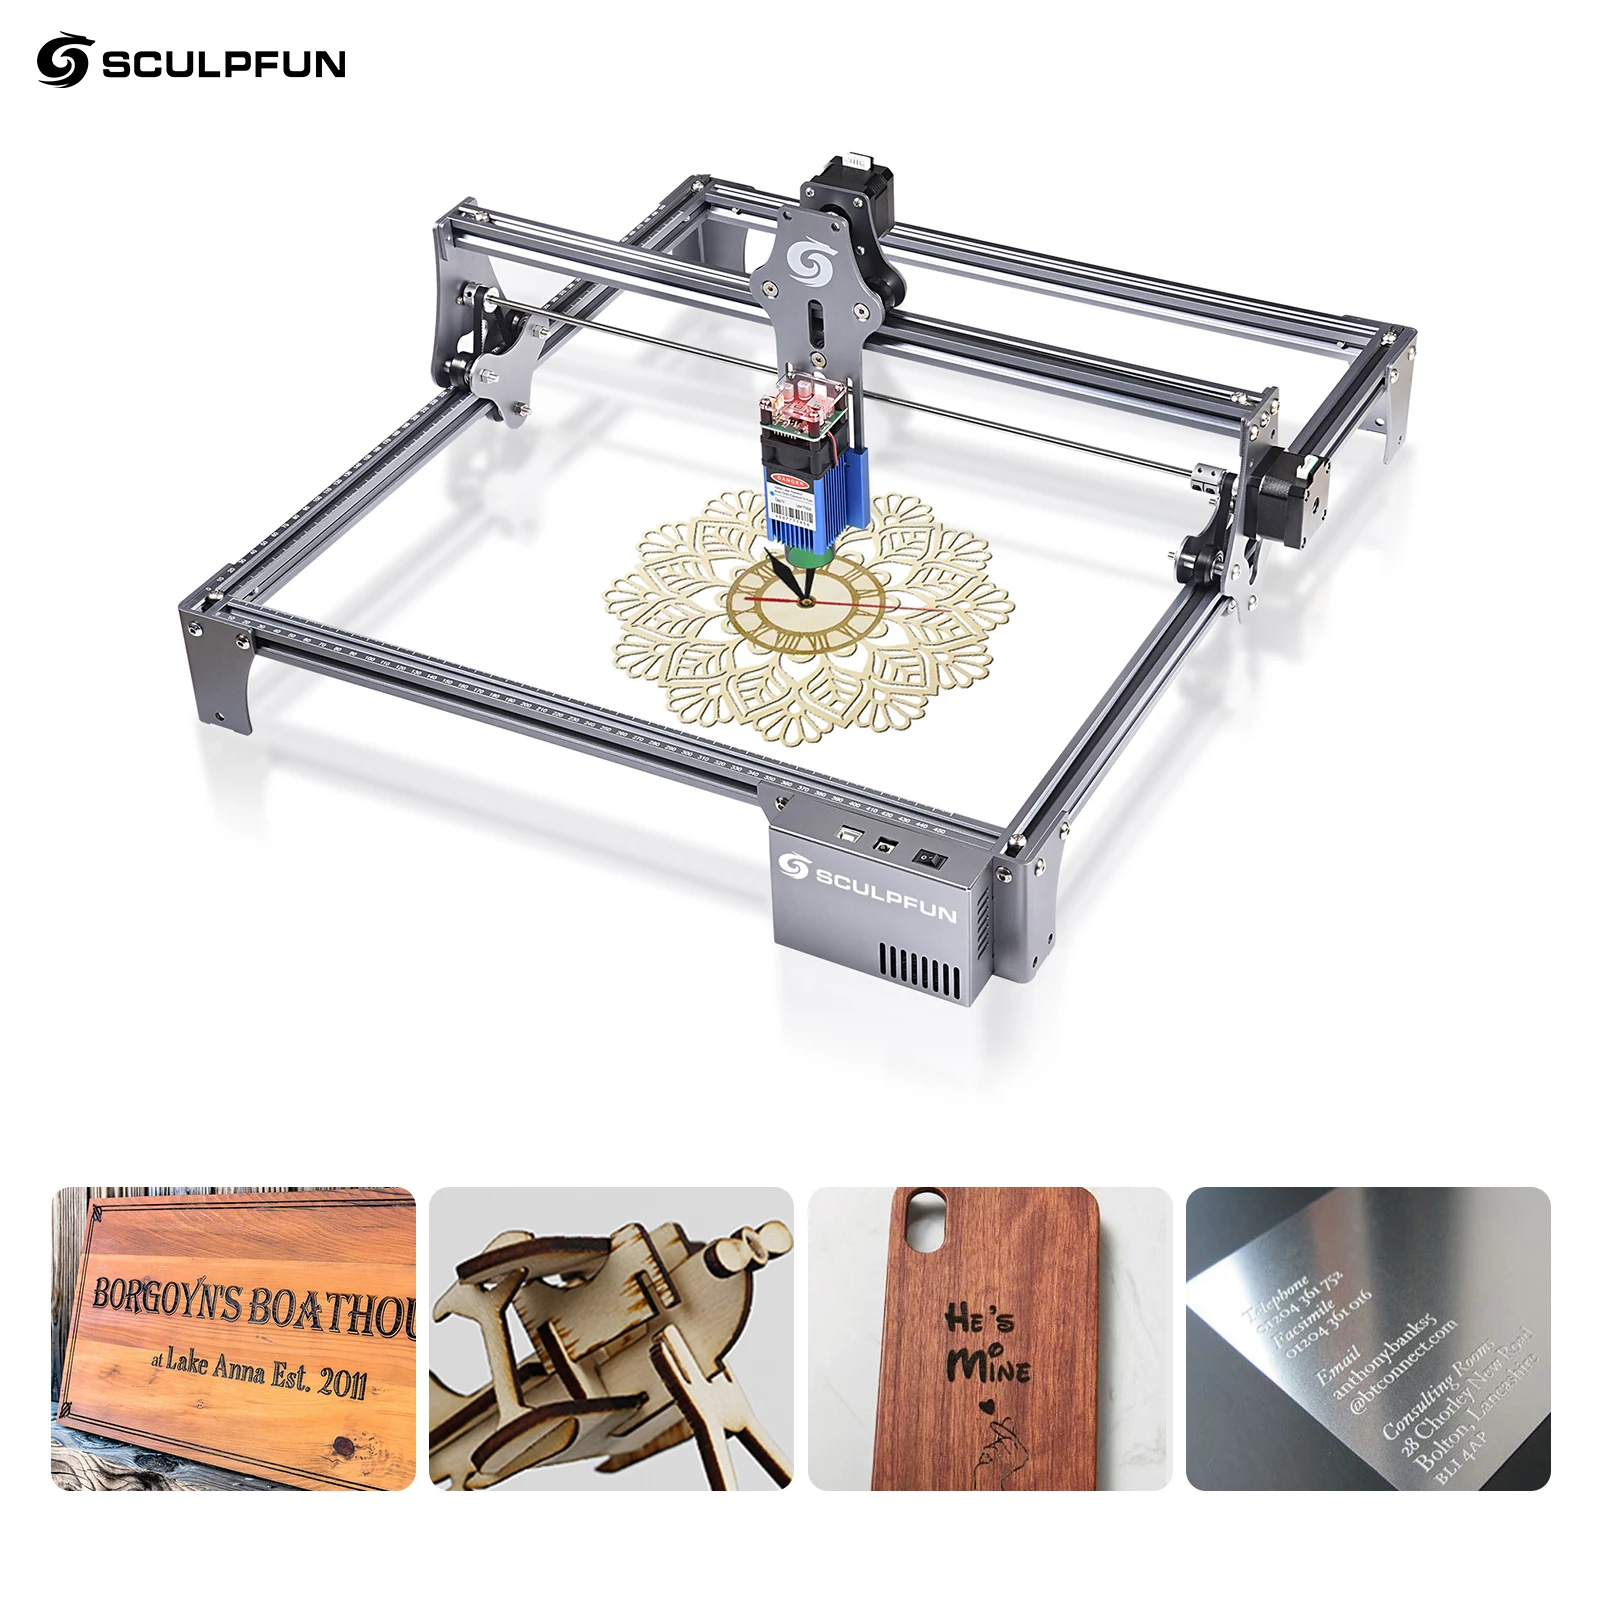 

SCULPFUN S6 Pro Laser Engraver 410x420mm LD+FAC Spot Compression Ultra-thin Focus Desktop DIY Engraving Cutting Machine